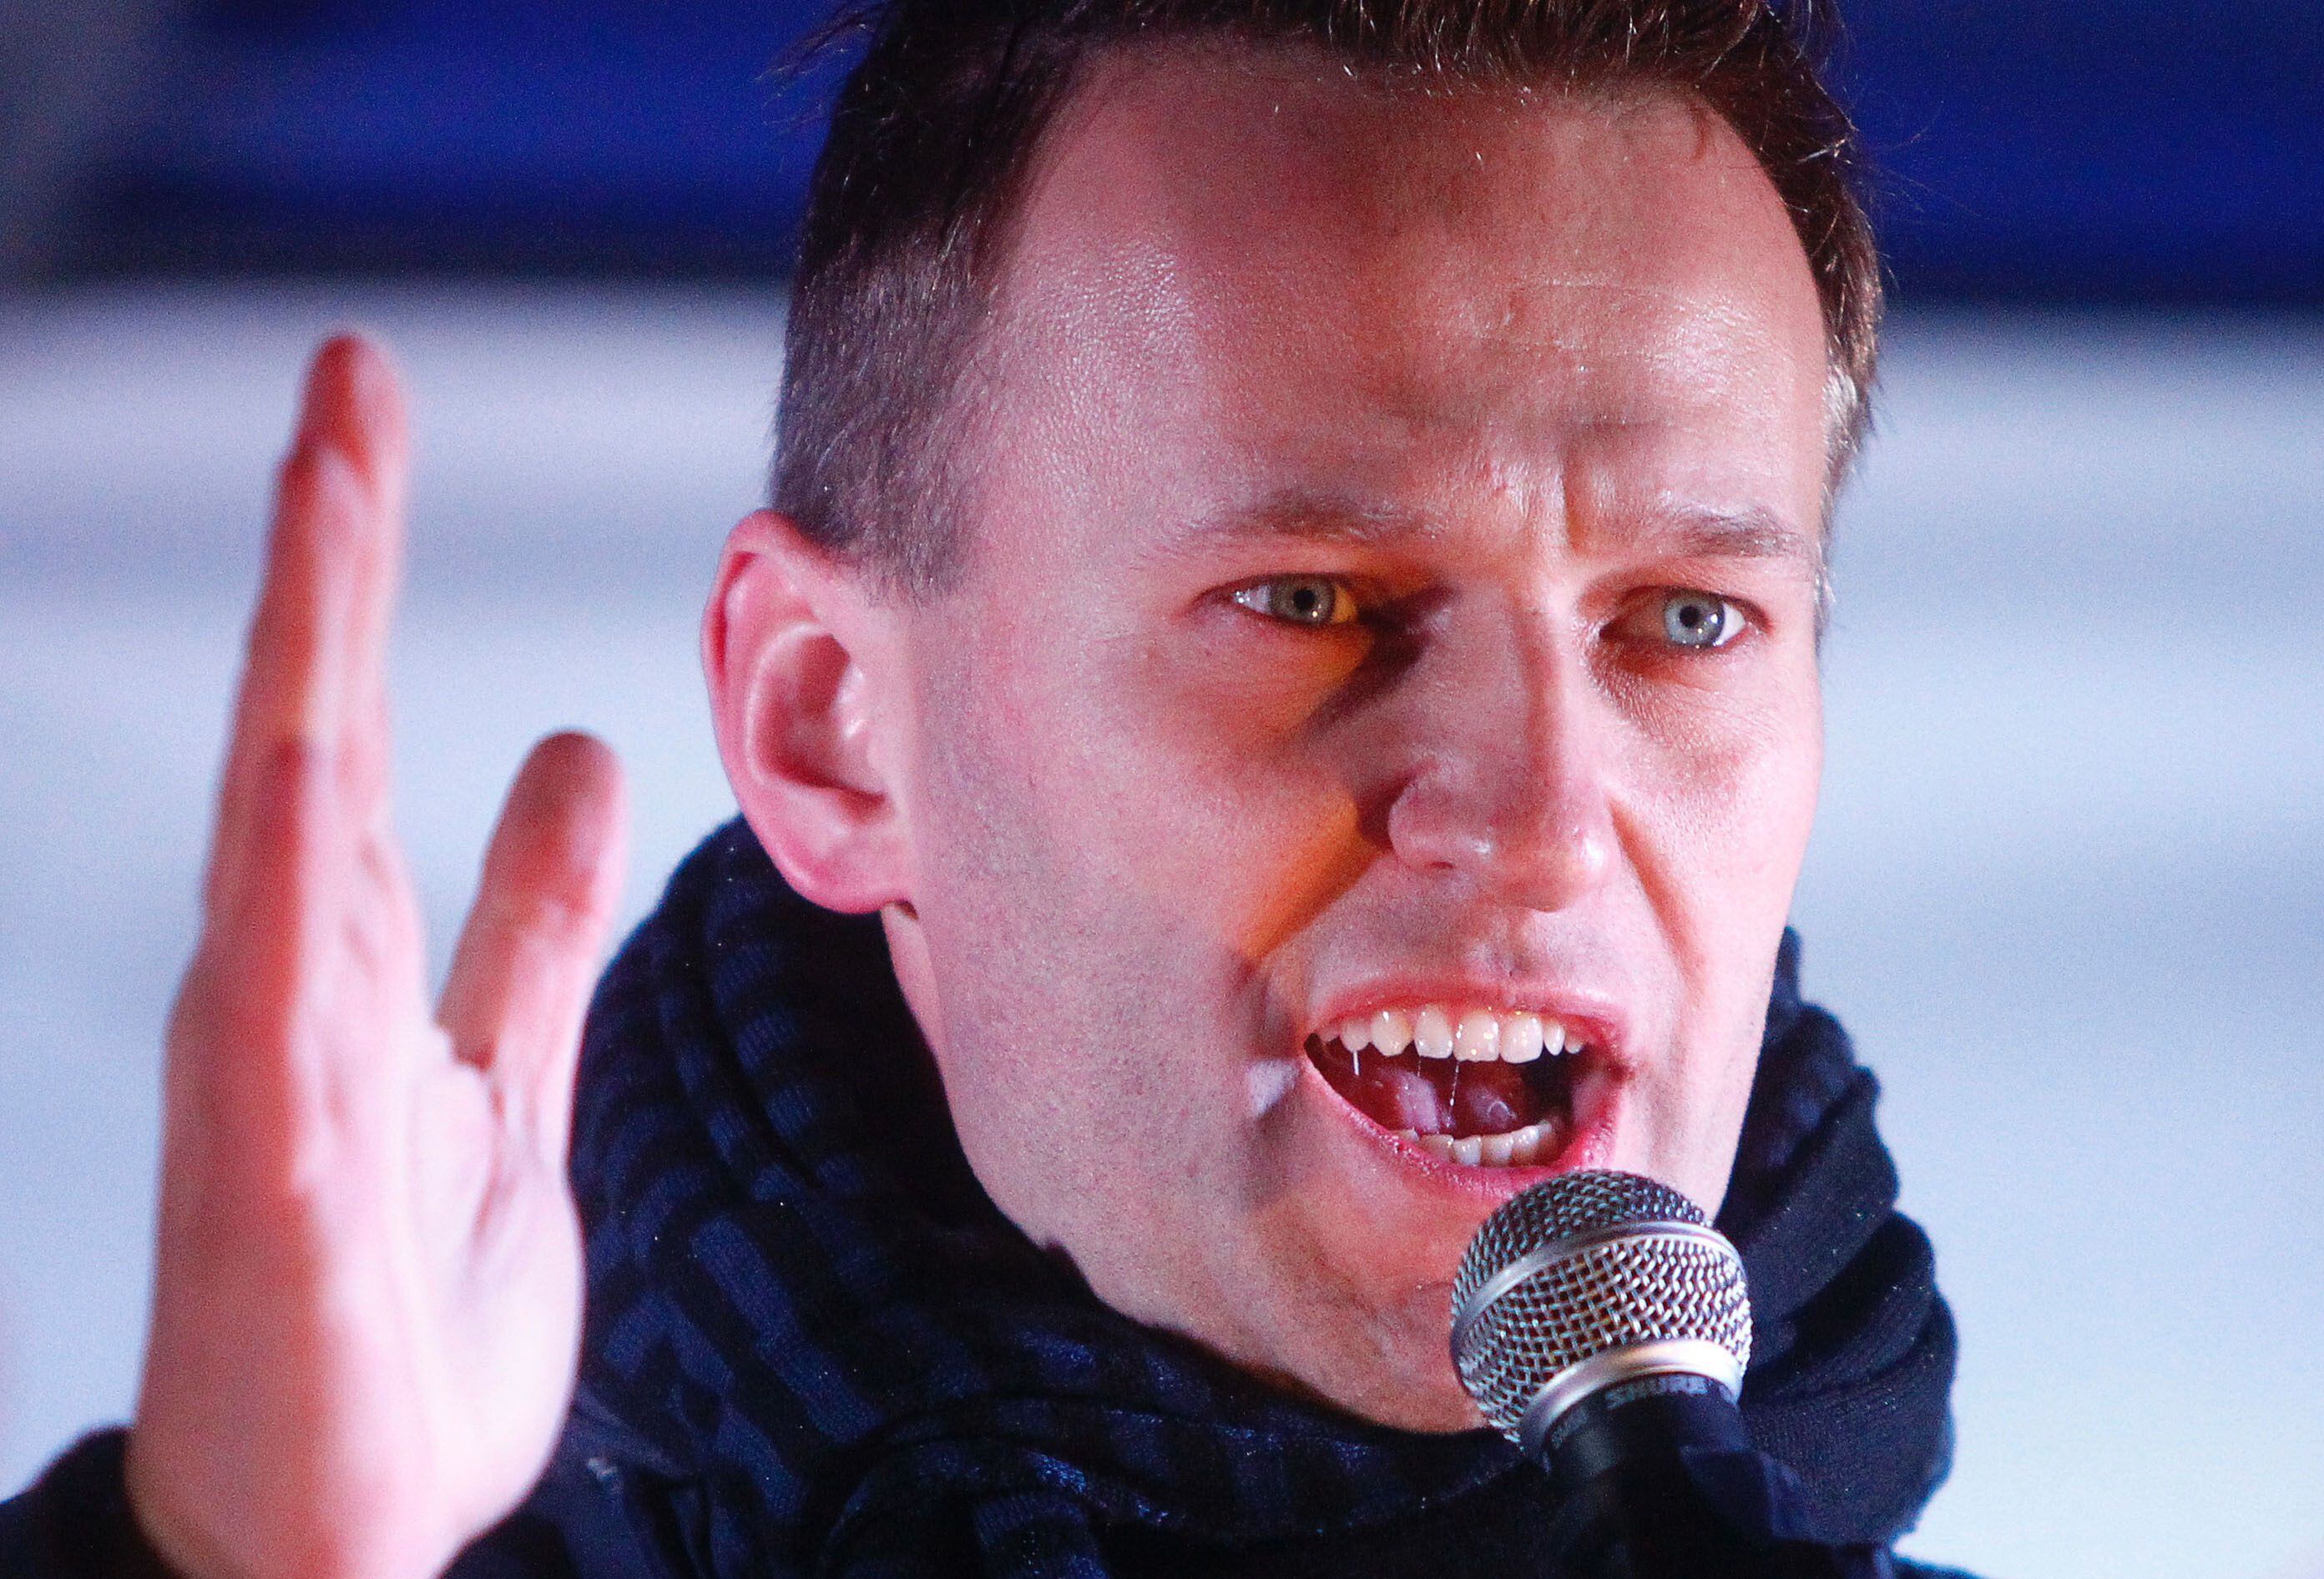 21/08/2020 El opositor ruso Alexei Navalni
POLITICA EUROPA RUSIA INTERNACIONAL
MIKHAIL VOSKRESENSKY / ZUMA PRESS / CONTACTOPHOTO
